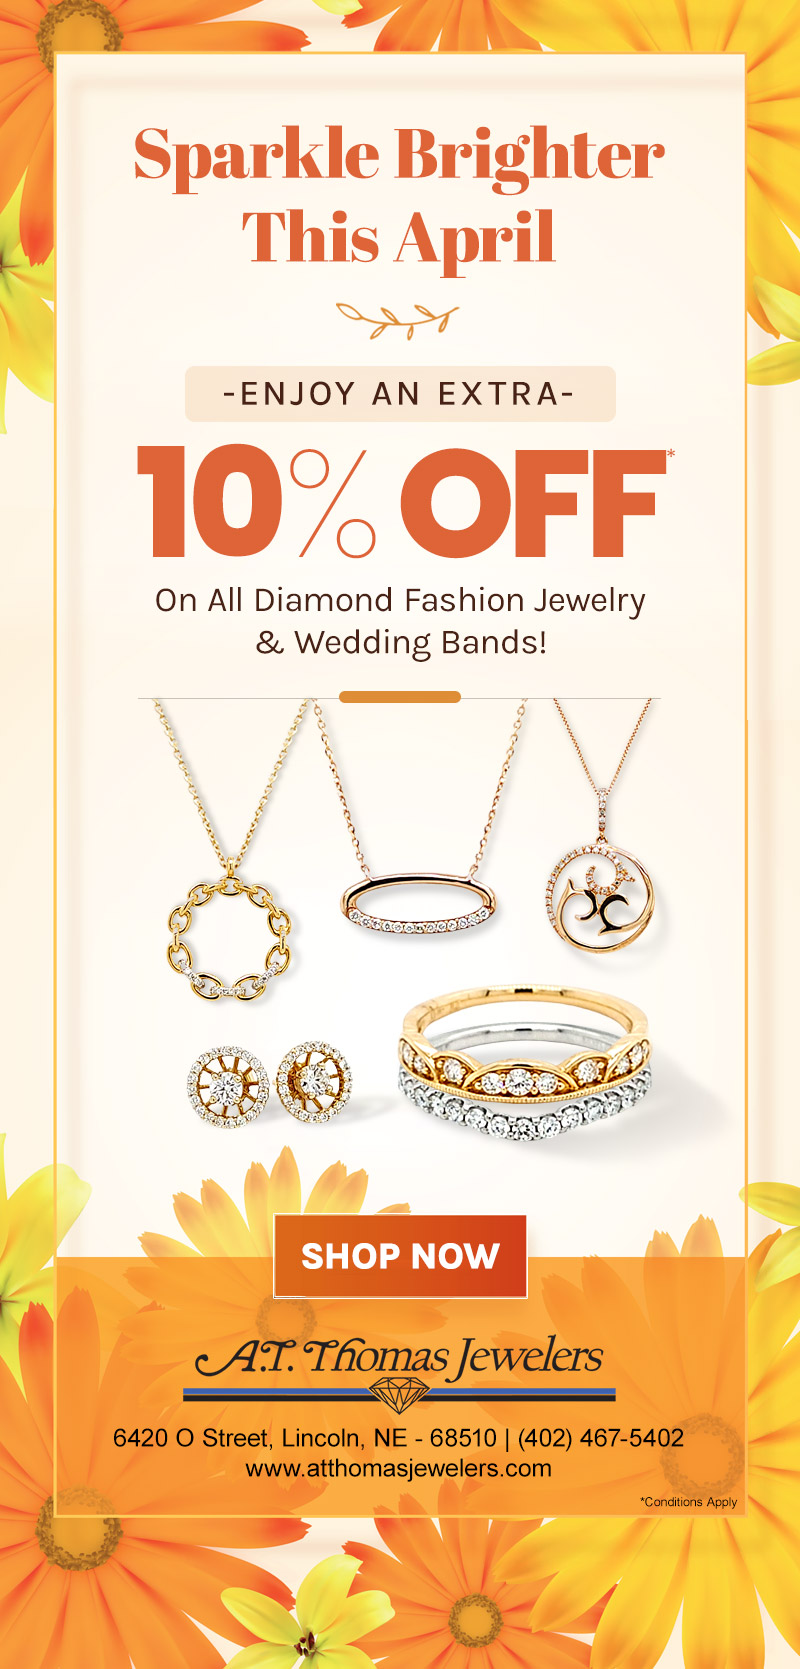 An extra 10% off all diamond fashion jewelry and diamond wedding bands